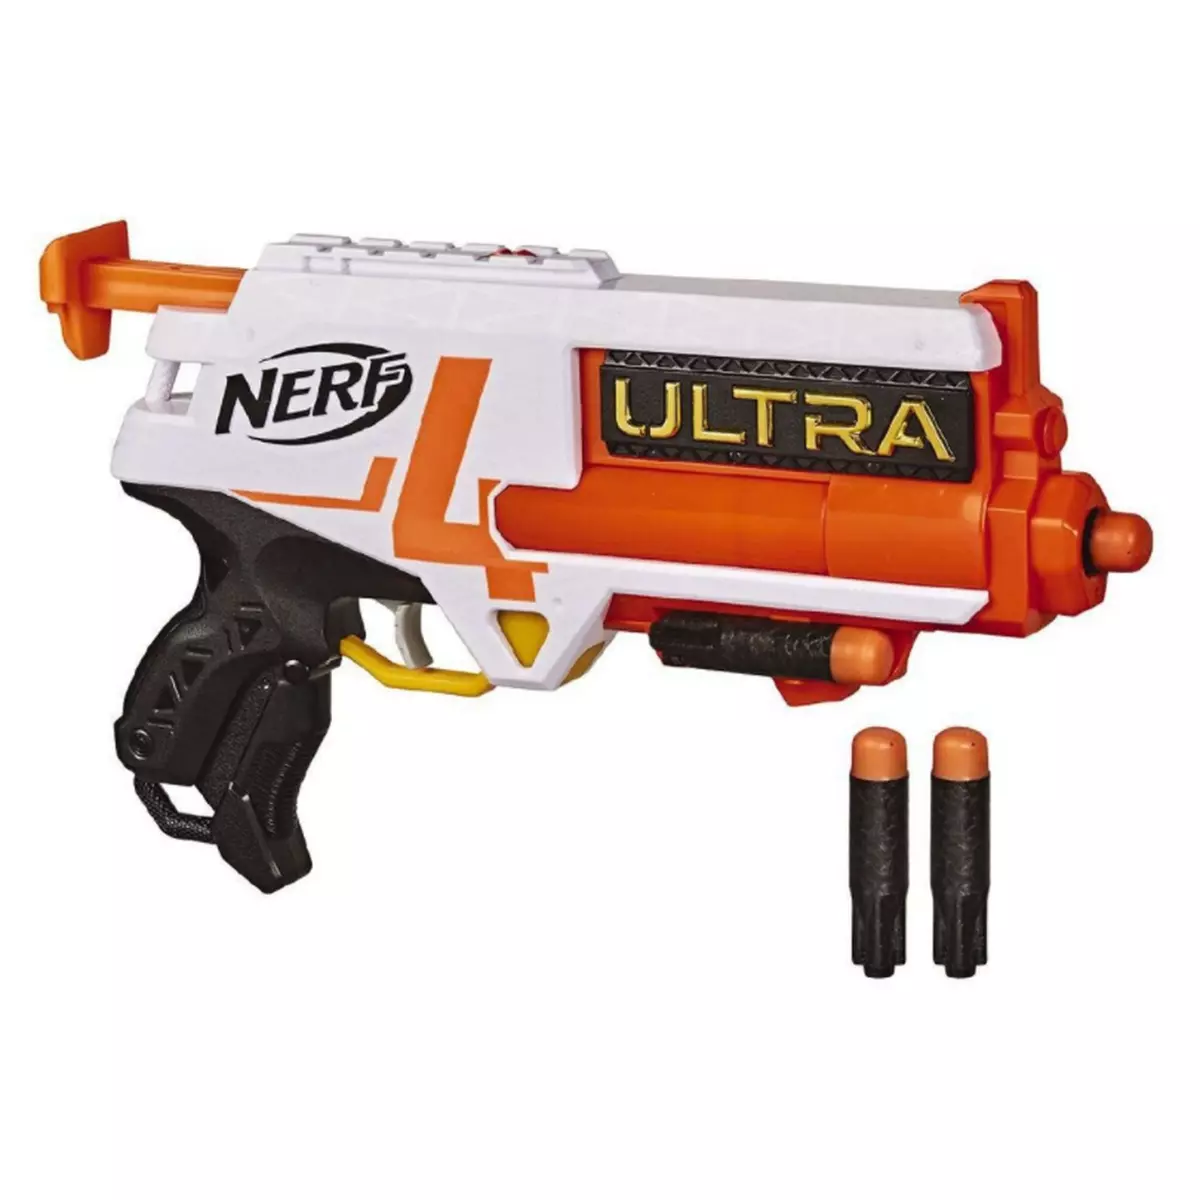 NERF Nerf Ultra Four